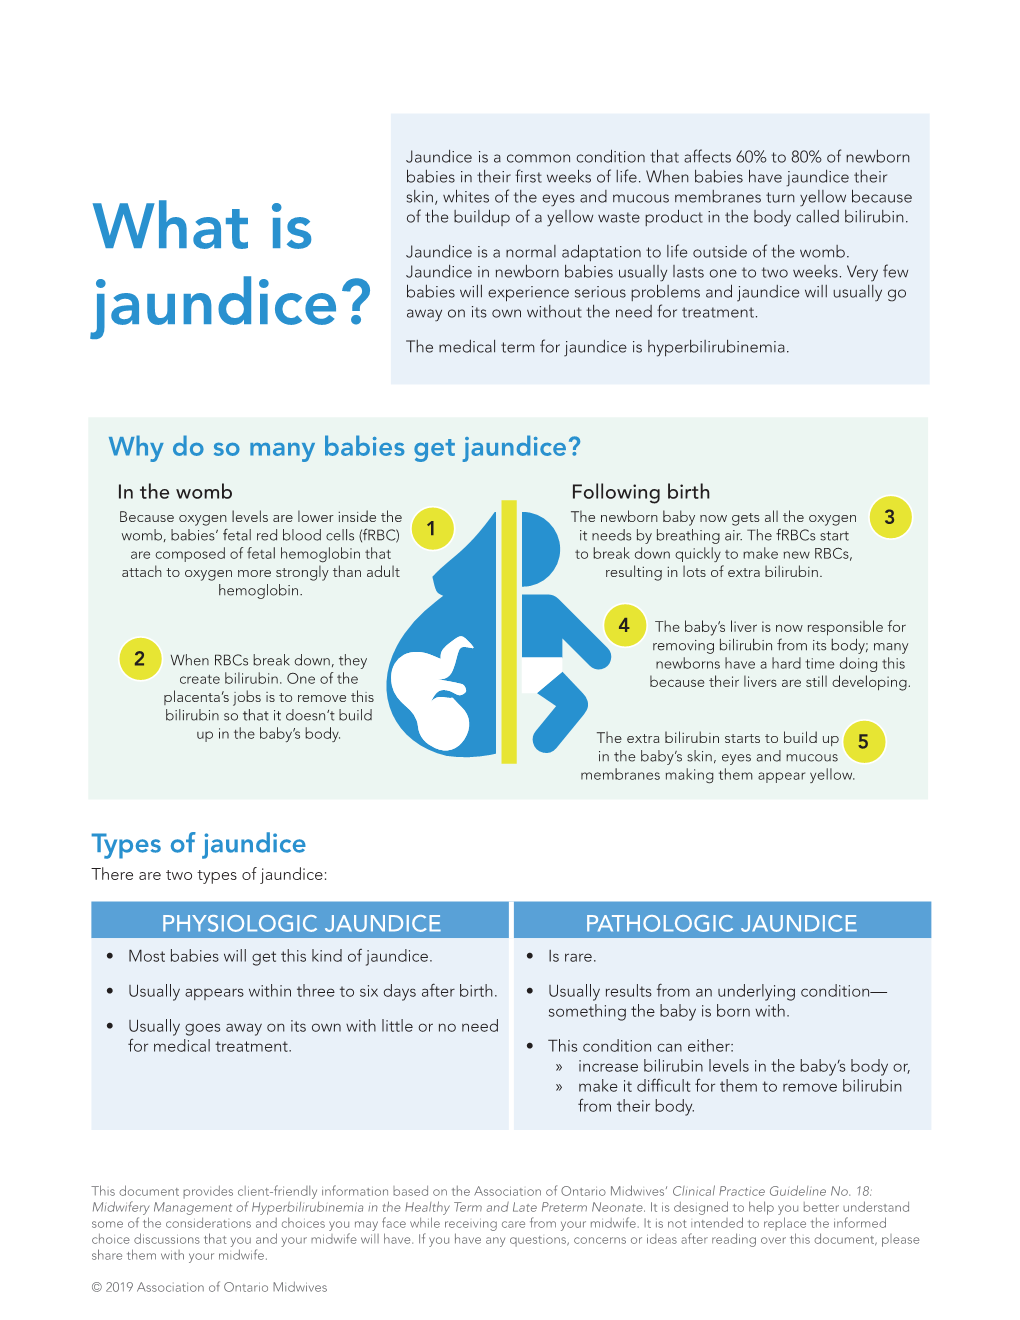 What Is Jaundice?